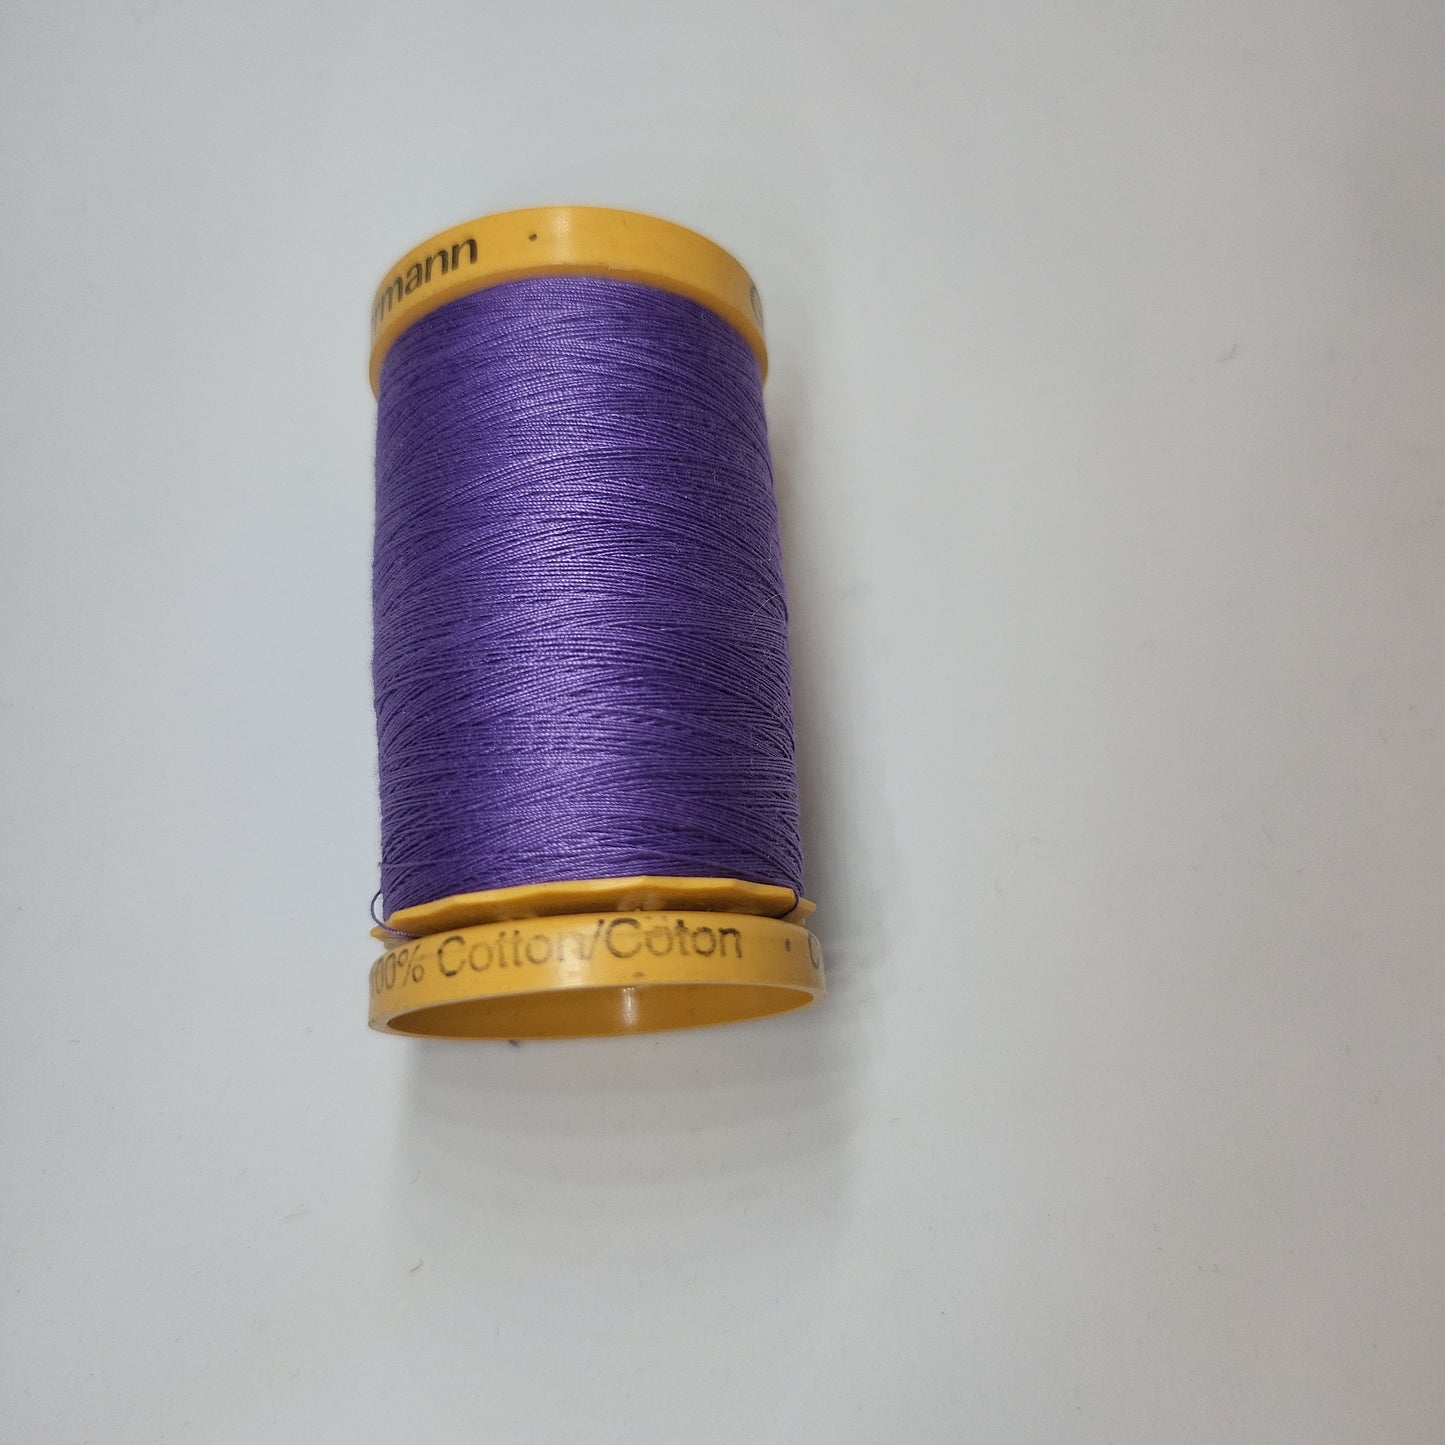 4434 Natural Cotton Thread